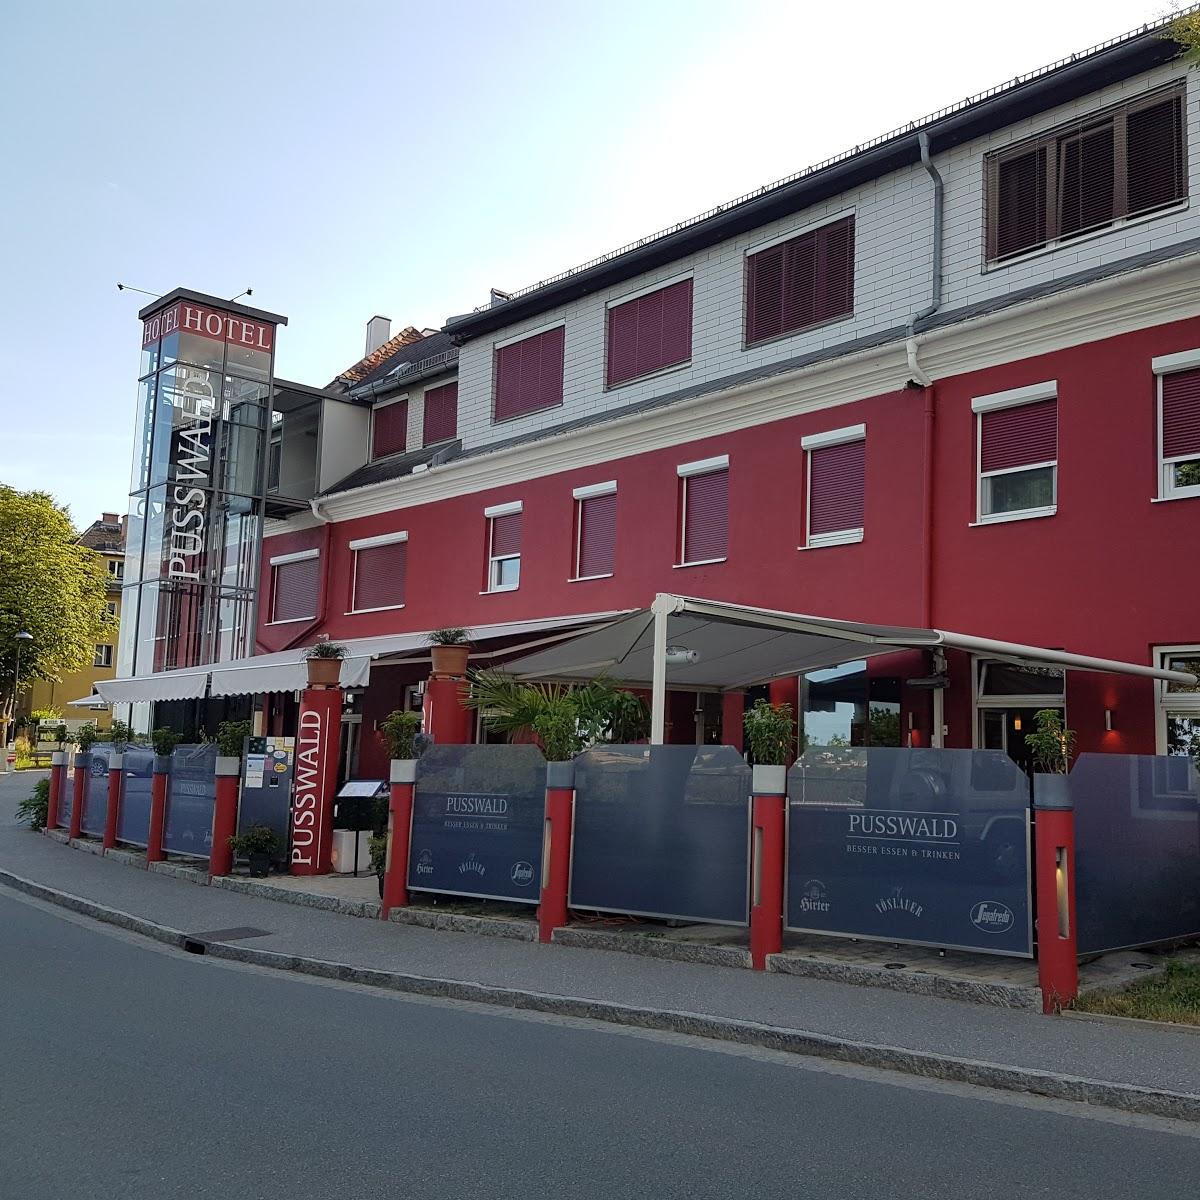 Restaurant "Hotel & Restaurant Pusswald" in Hartberg